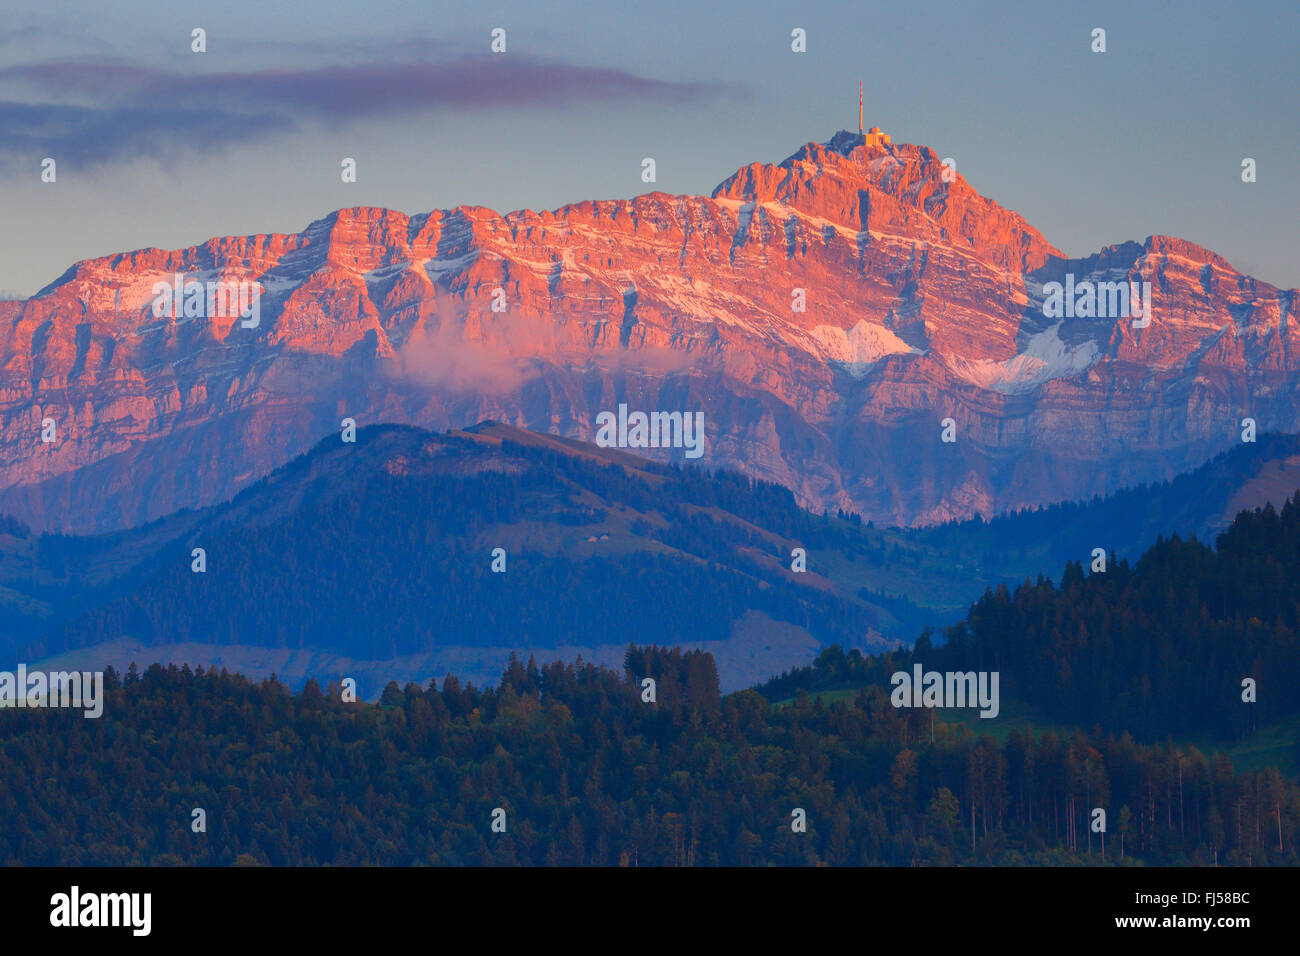 Saentis schweiz hi-res stock photography and images - Alamy